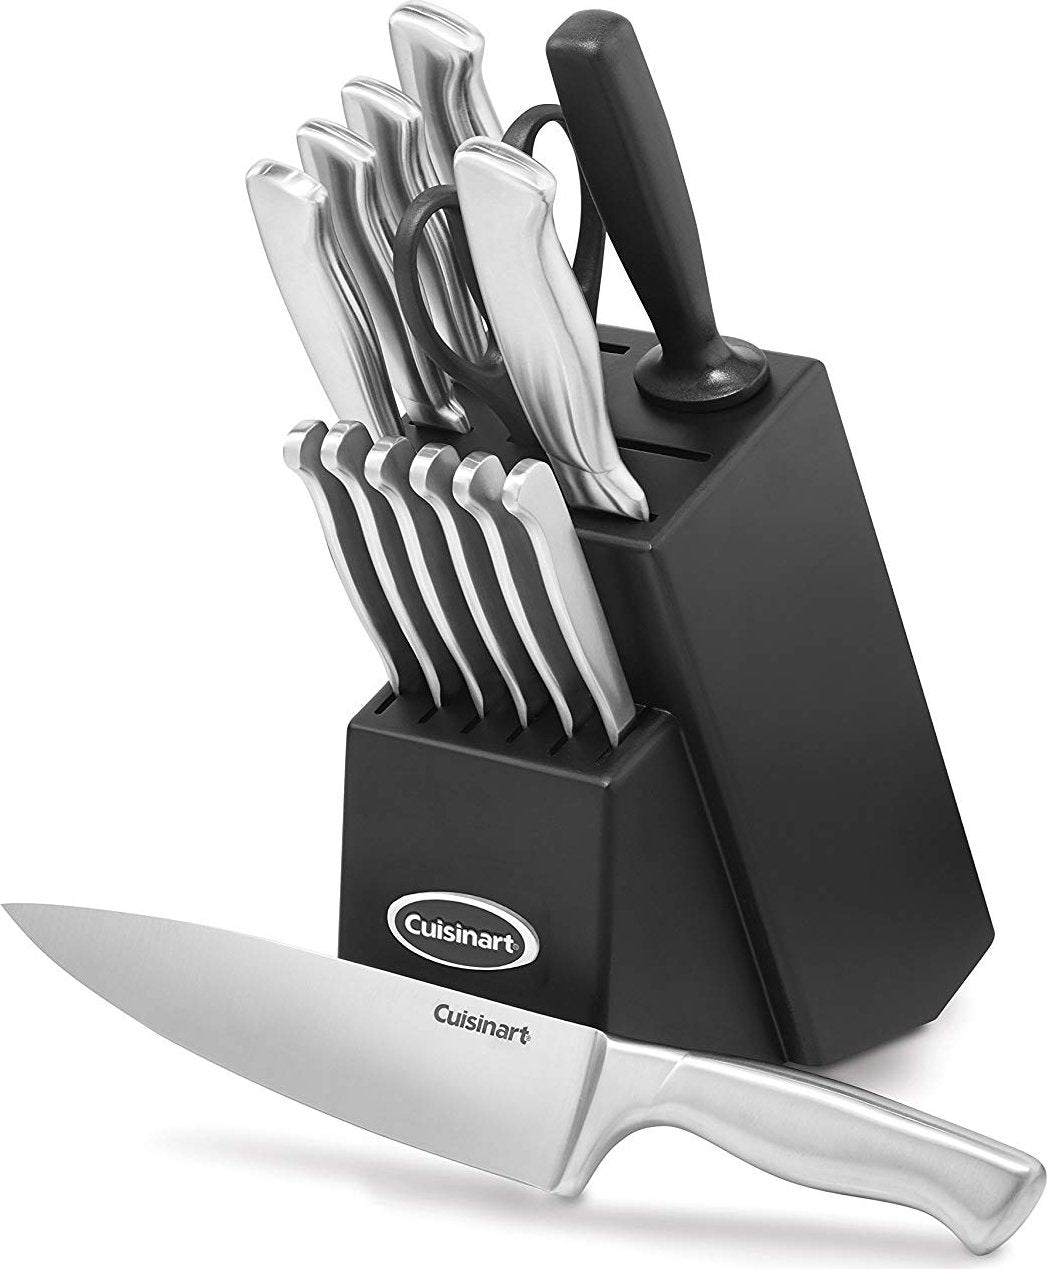 Cuisinart - 15 PC Classic Stainless Steel Knife Block Set - SSC-15C